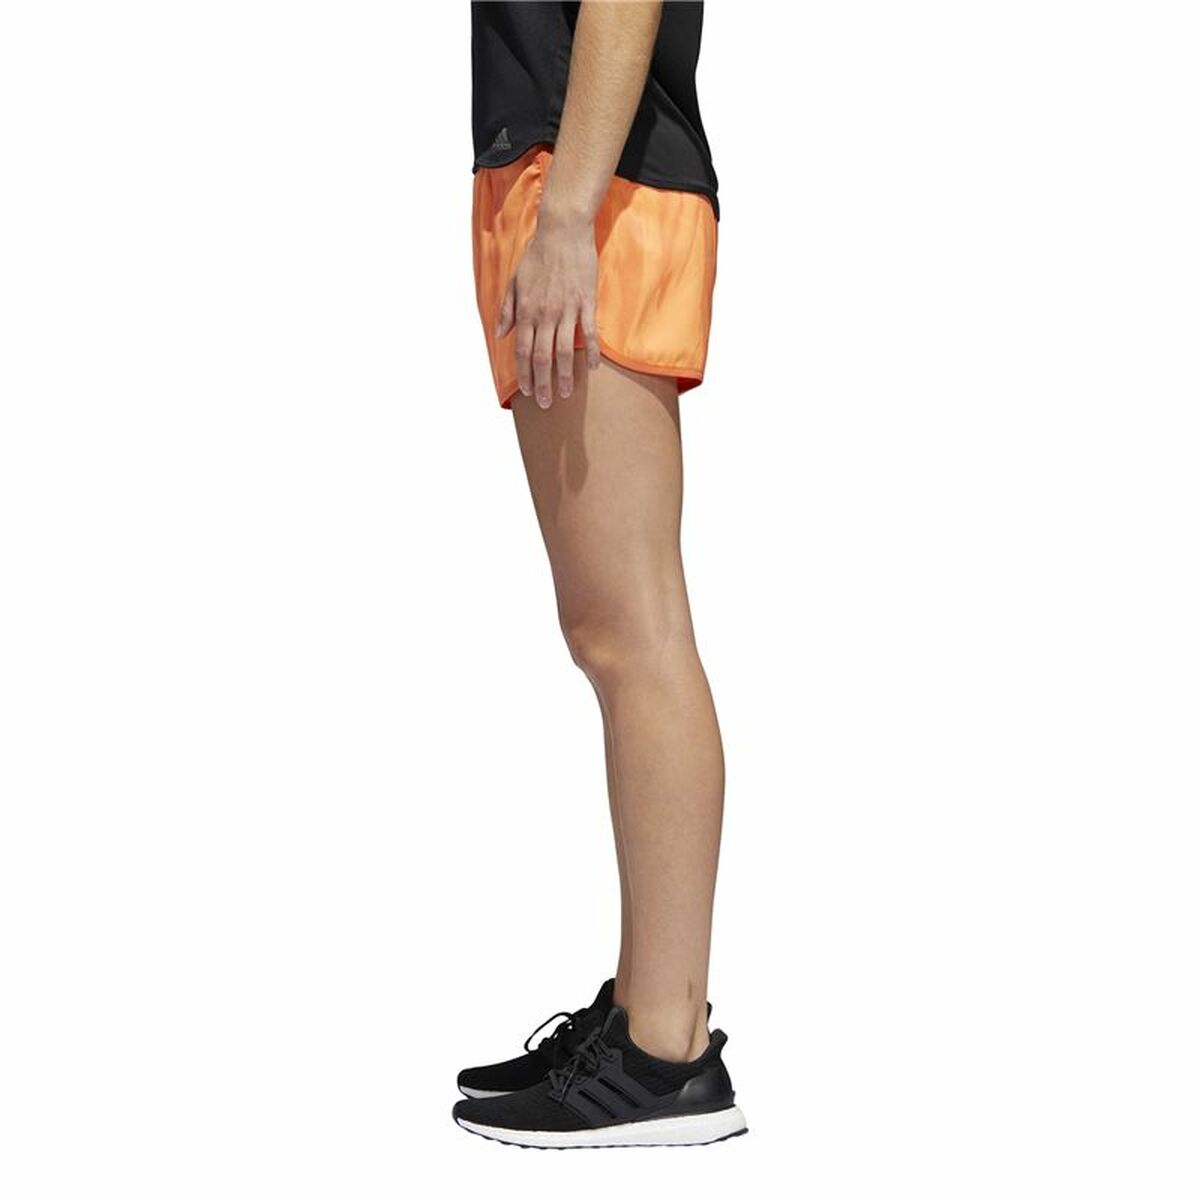 Sports Shorts for Women Adidas M10 3" Orange